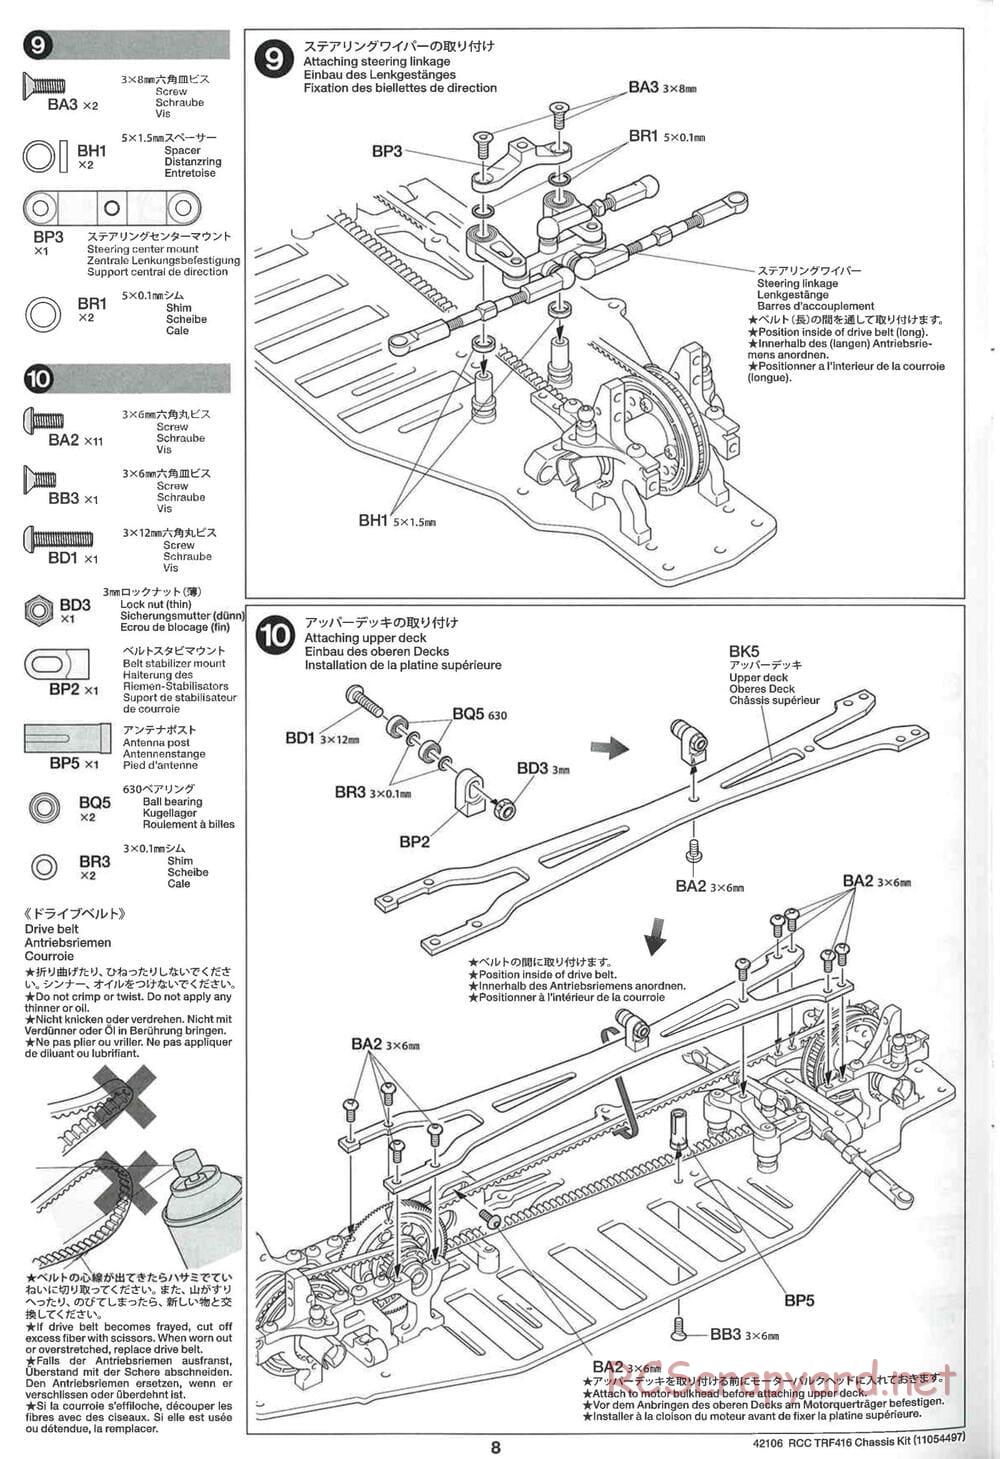 Tamiya - TRF416 Chassis - Manual - Page 8